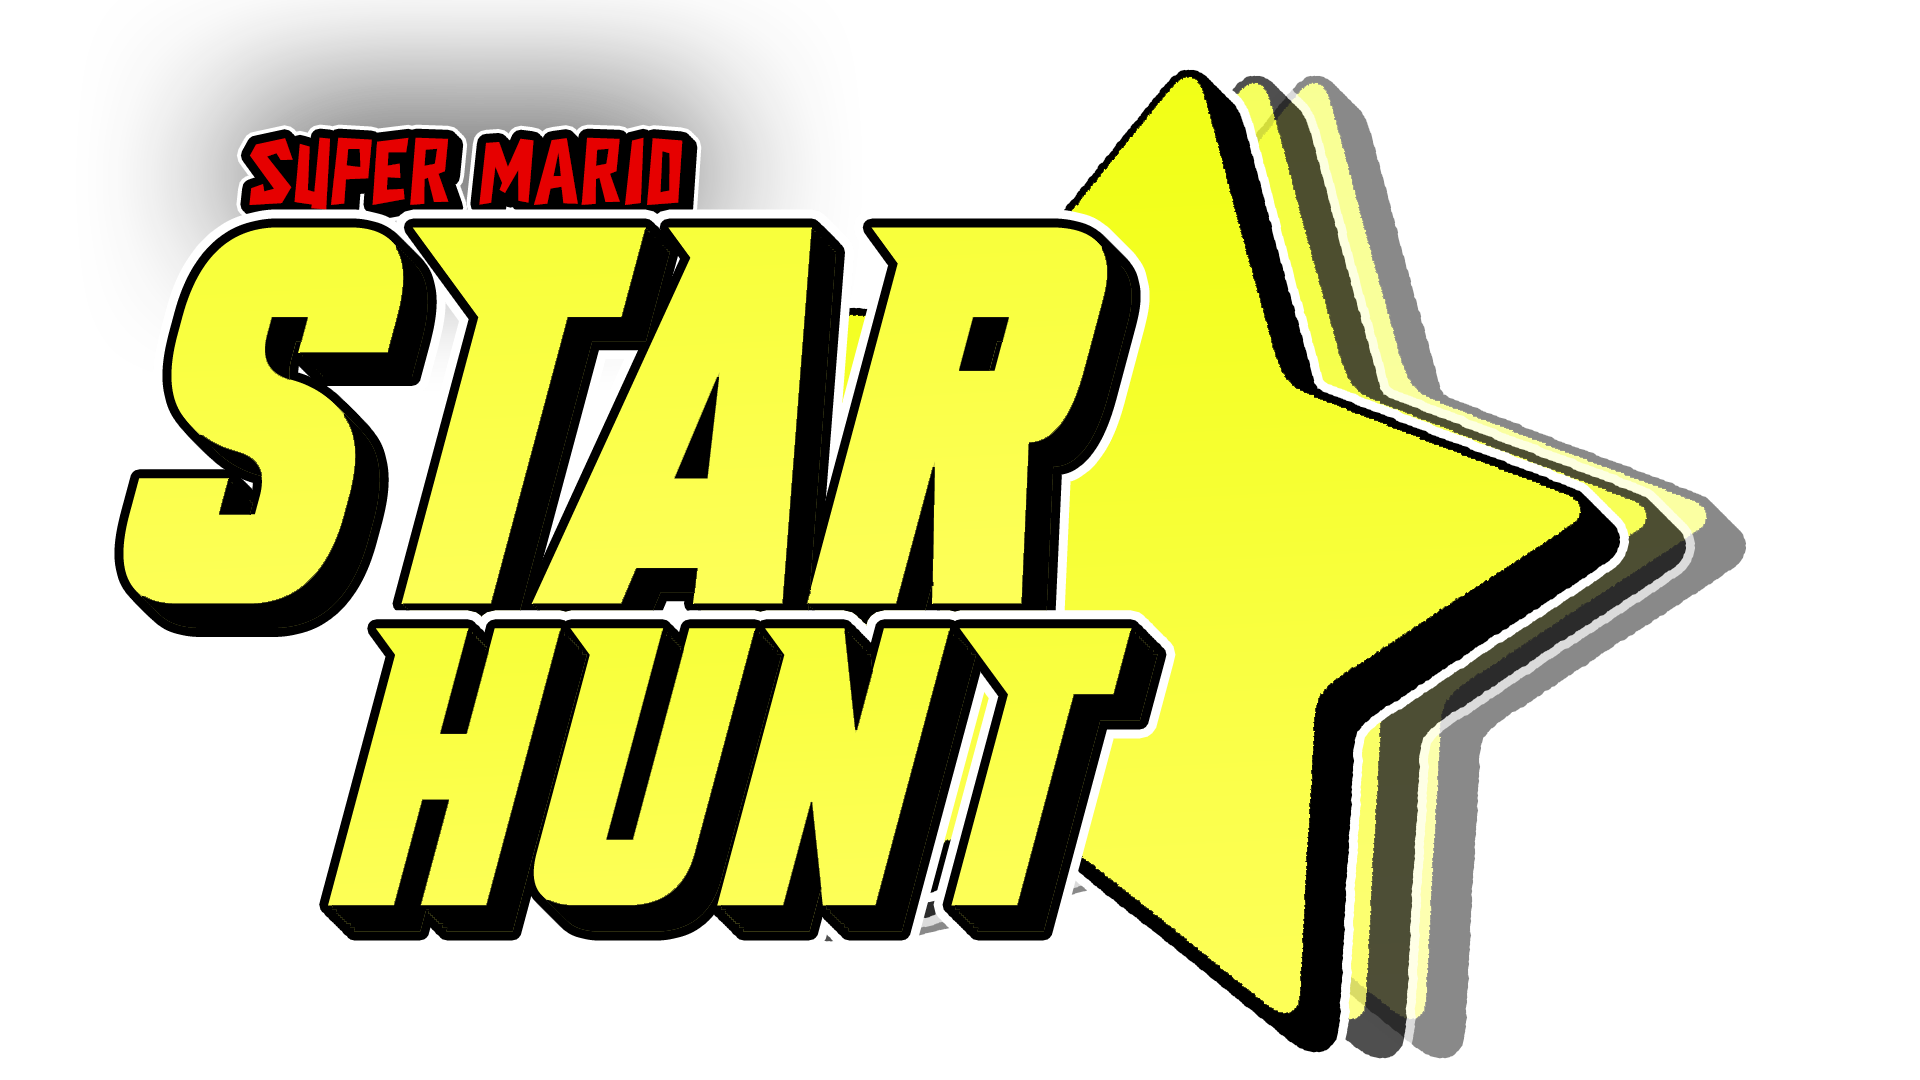 Super Mario: Star Hunt